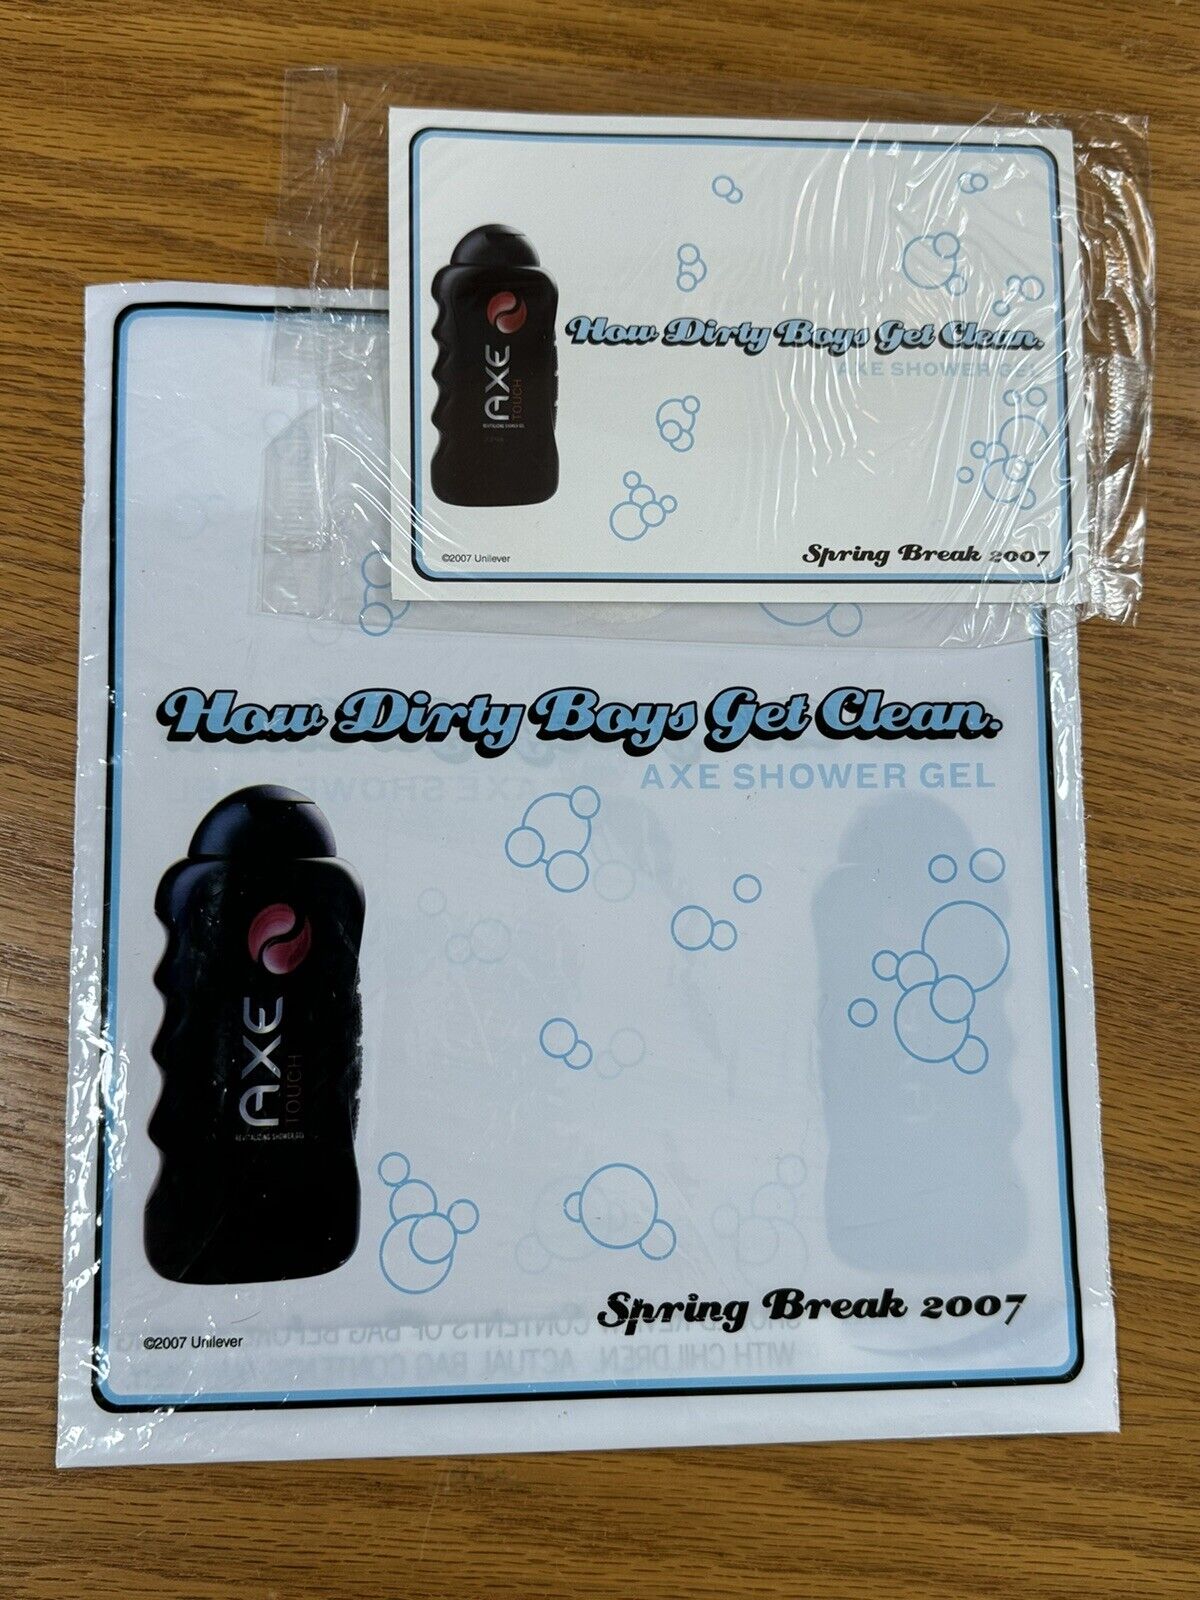 Axe Body Spray Shower Gel 2007 Spring Break Promotion Bag - Dirty Boys Get Clean